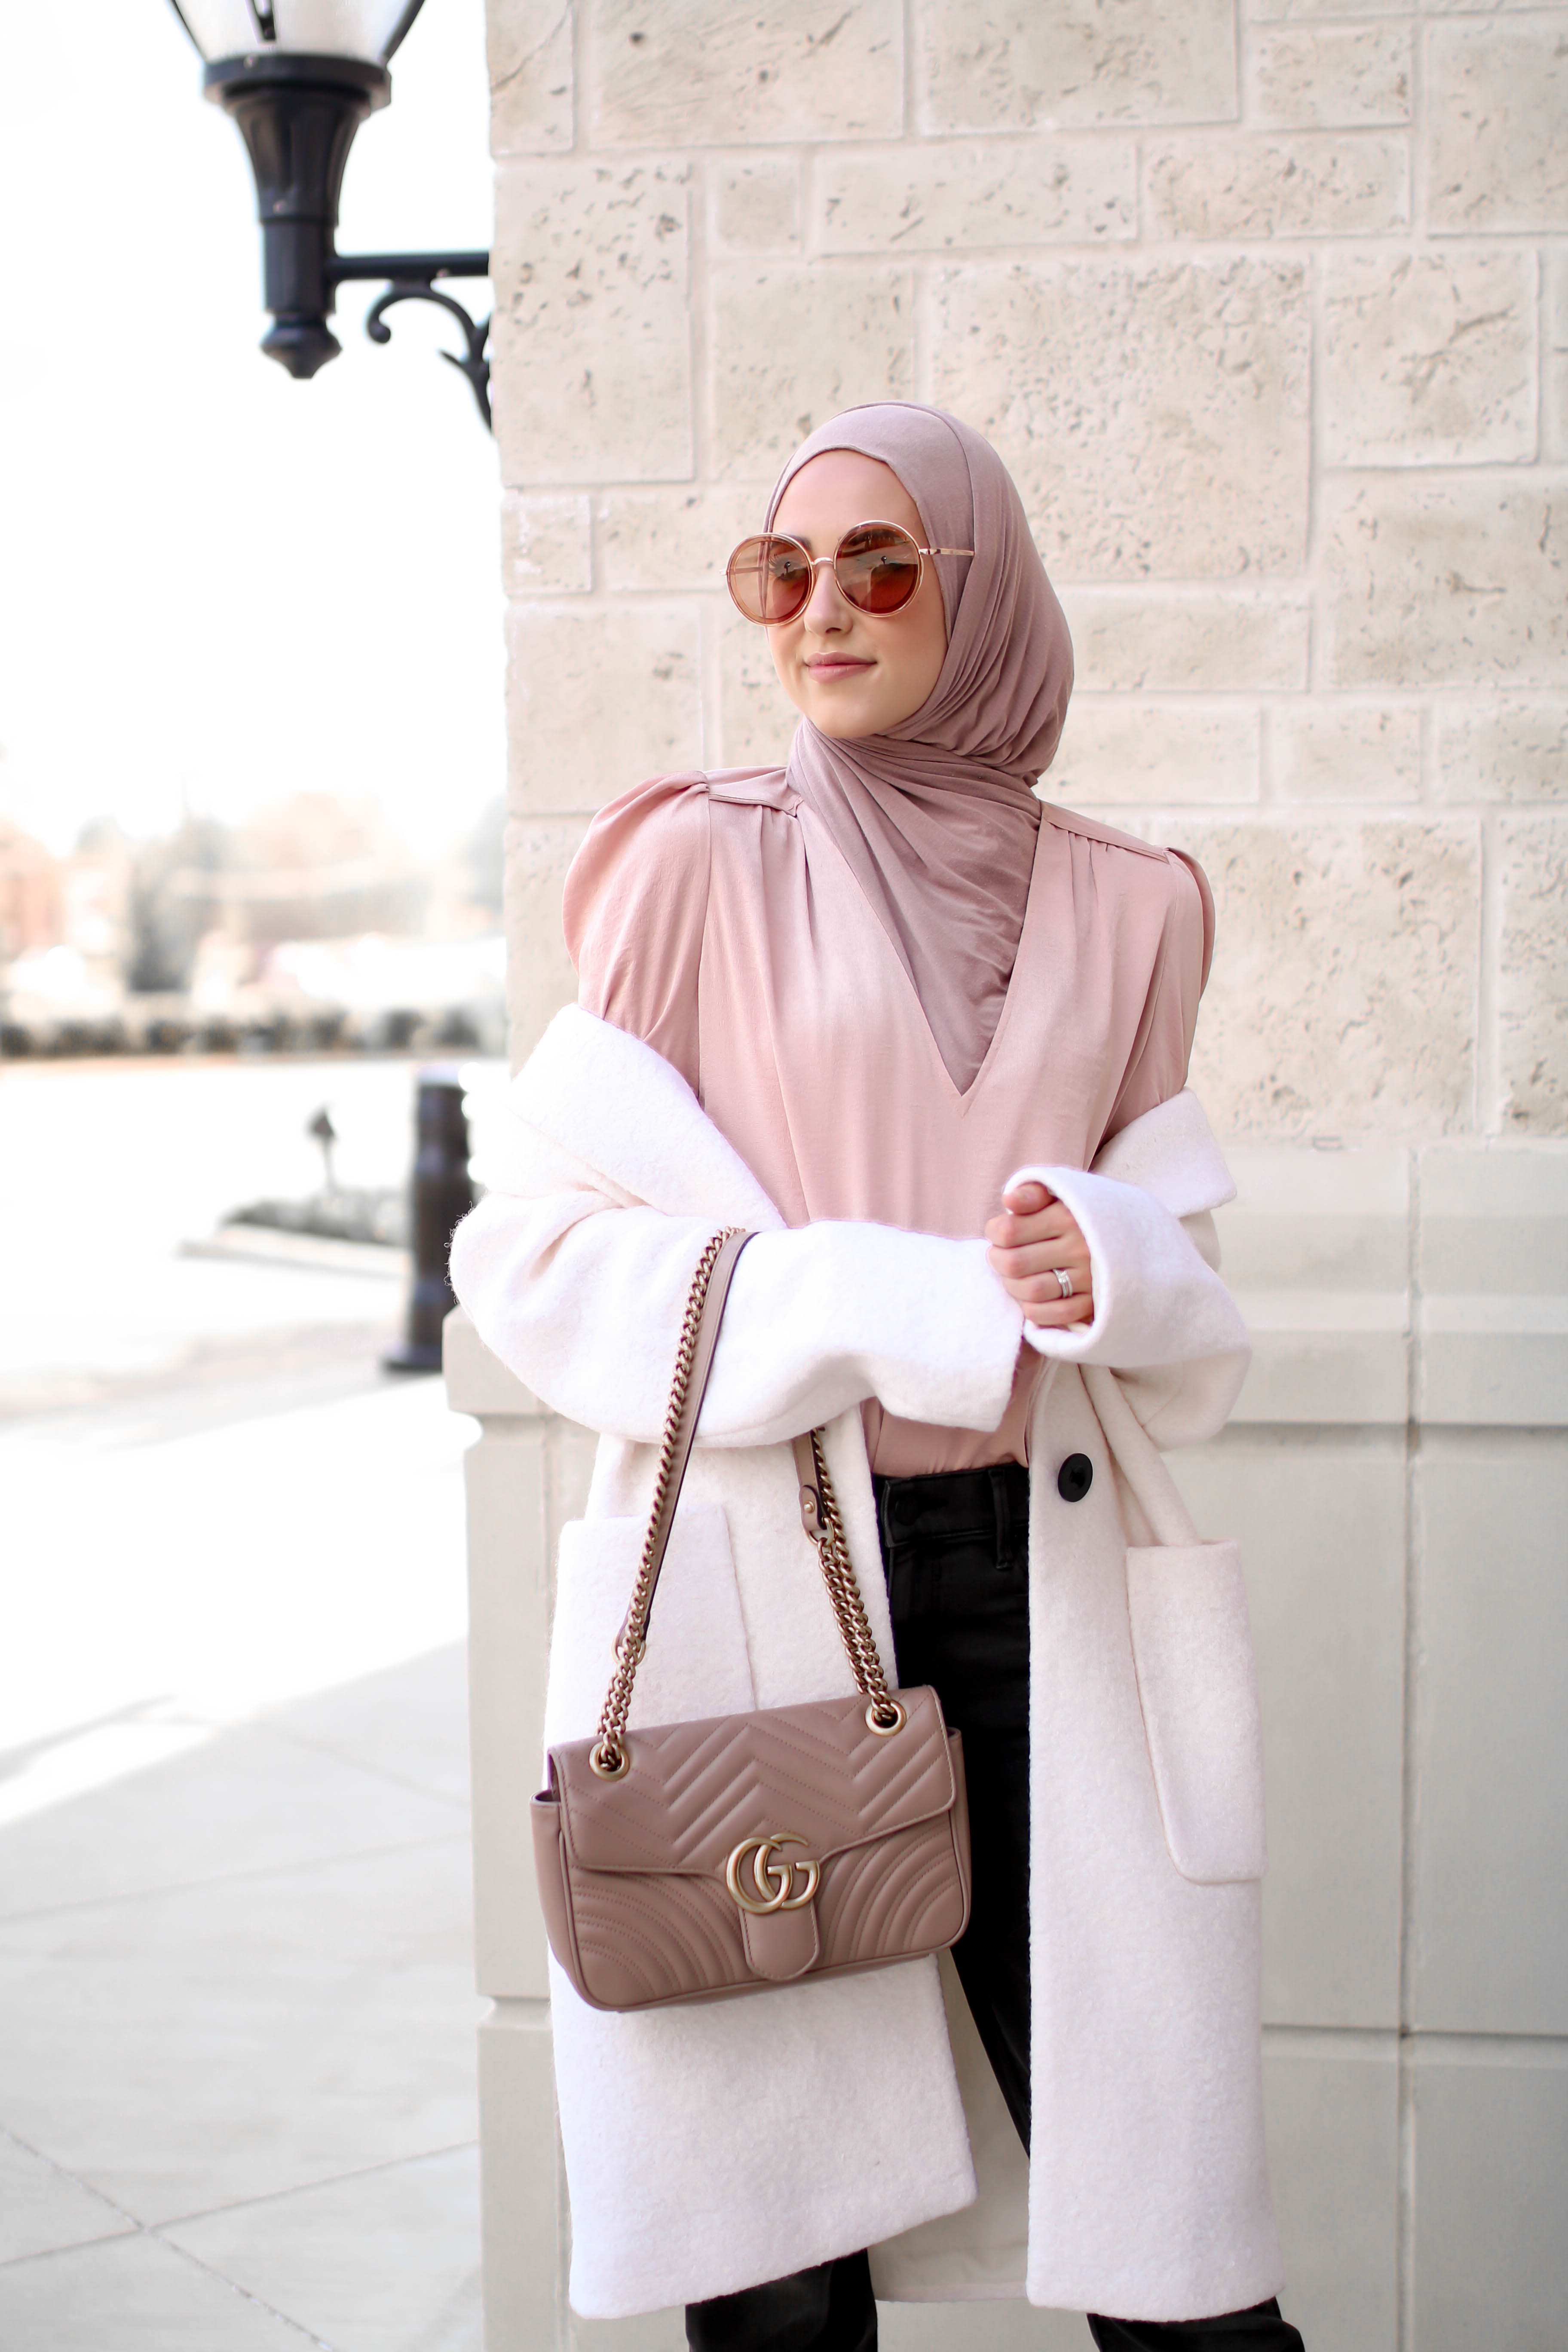 With Love, Leena. – A Fashion + Lifestyle Blog by Leena Asad